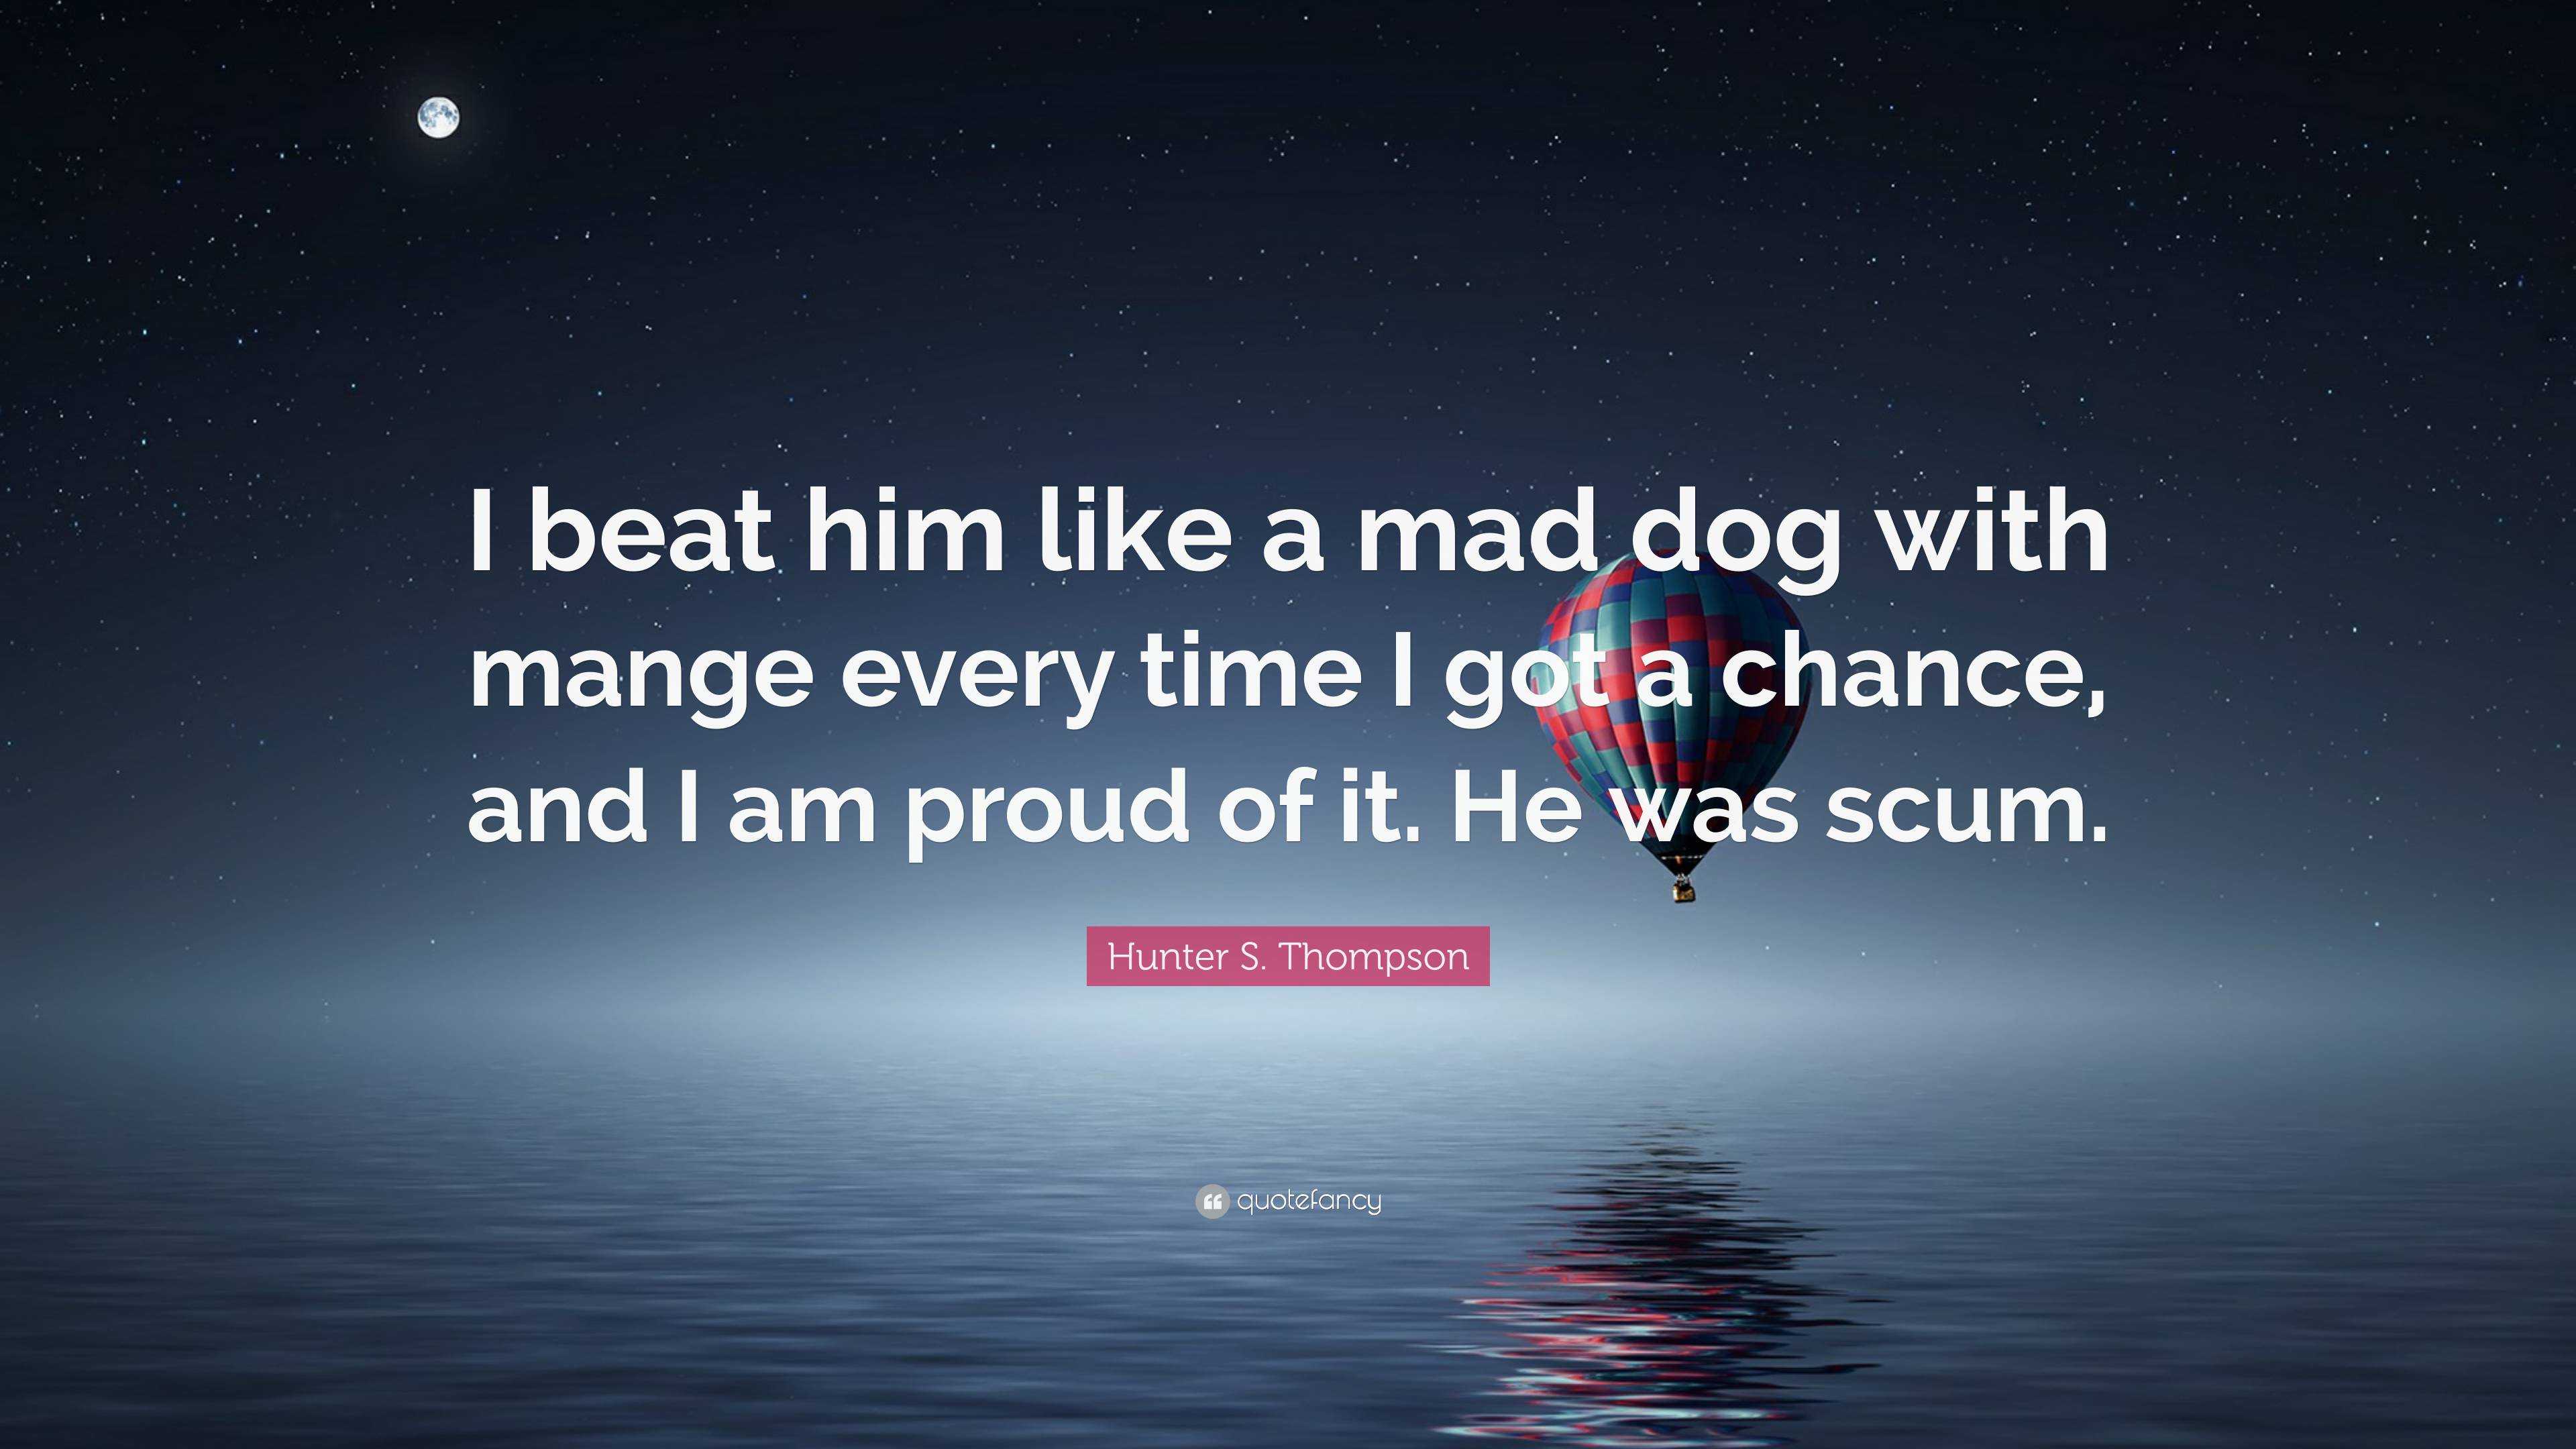 Hunter S. Thompson Quote: “I beat him like a mad dog with mange time I